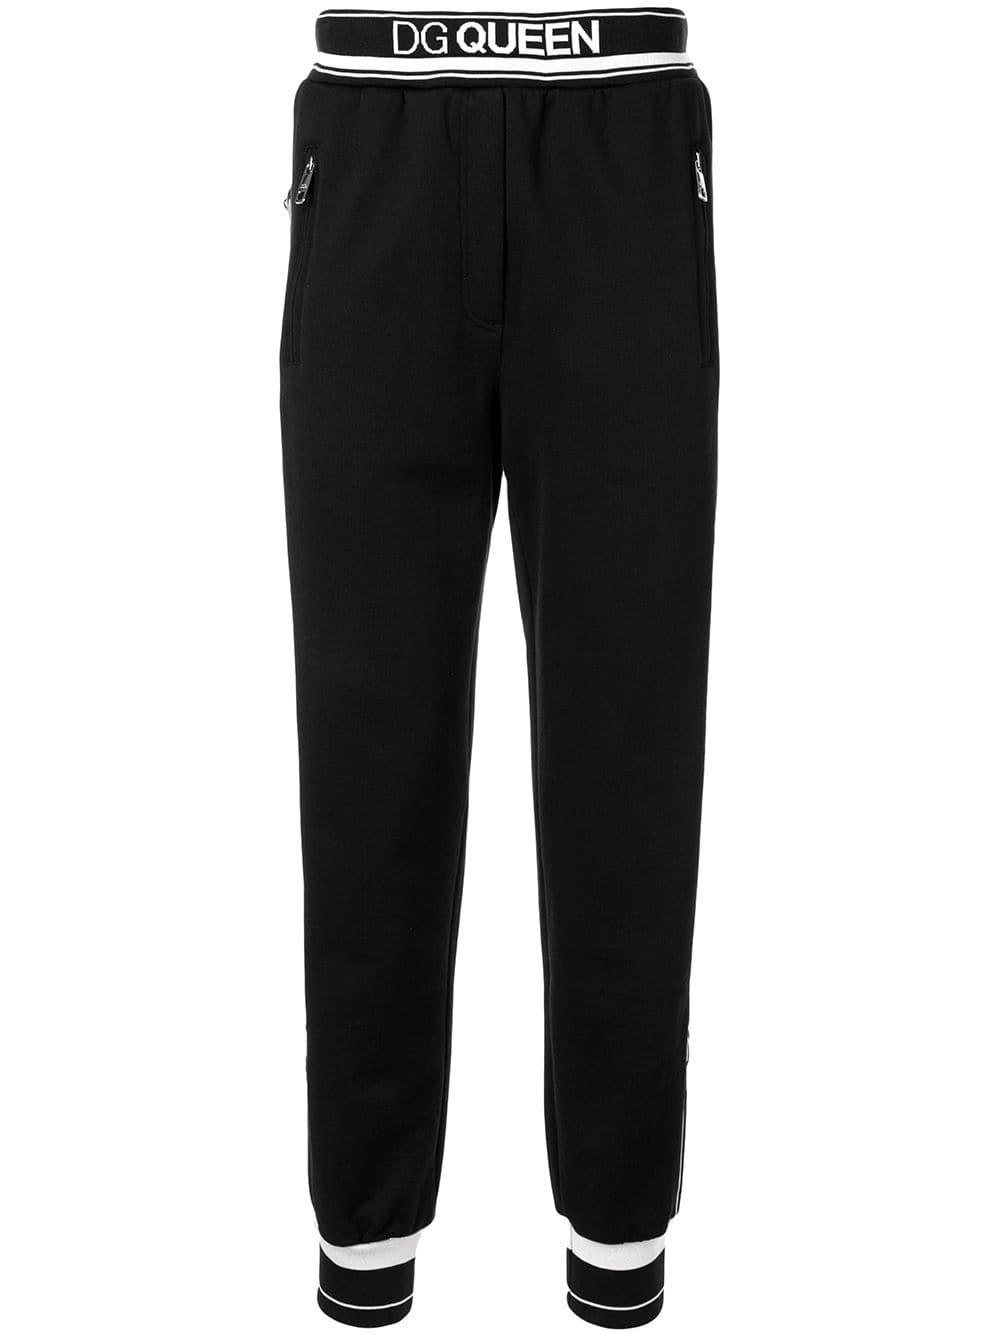 Dolce & Gabbana Cotton Dg Queen Track Pants in Black | Lyst Canada